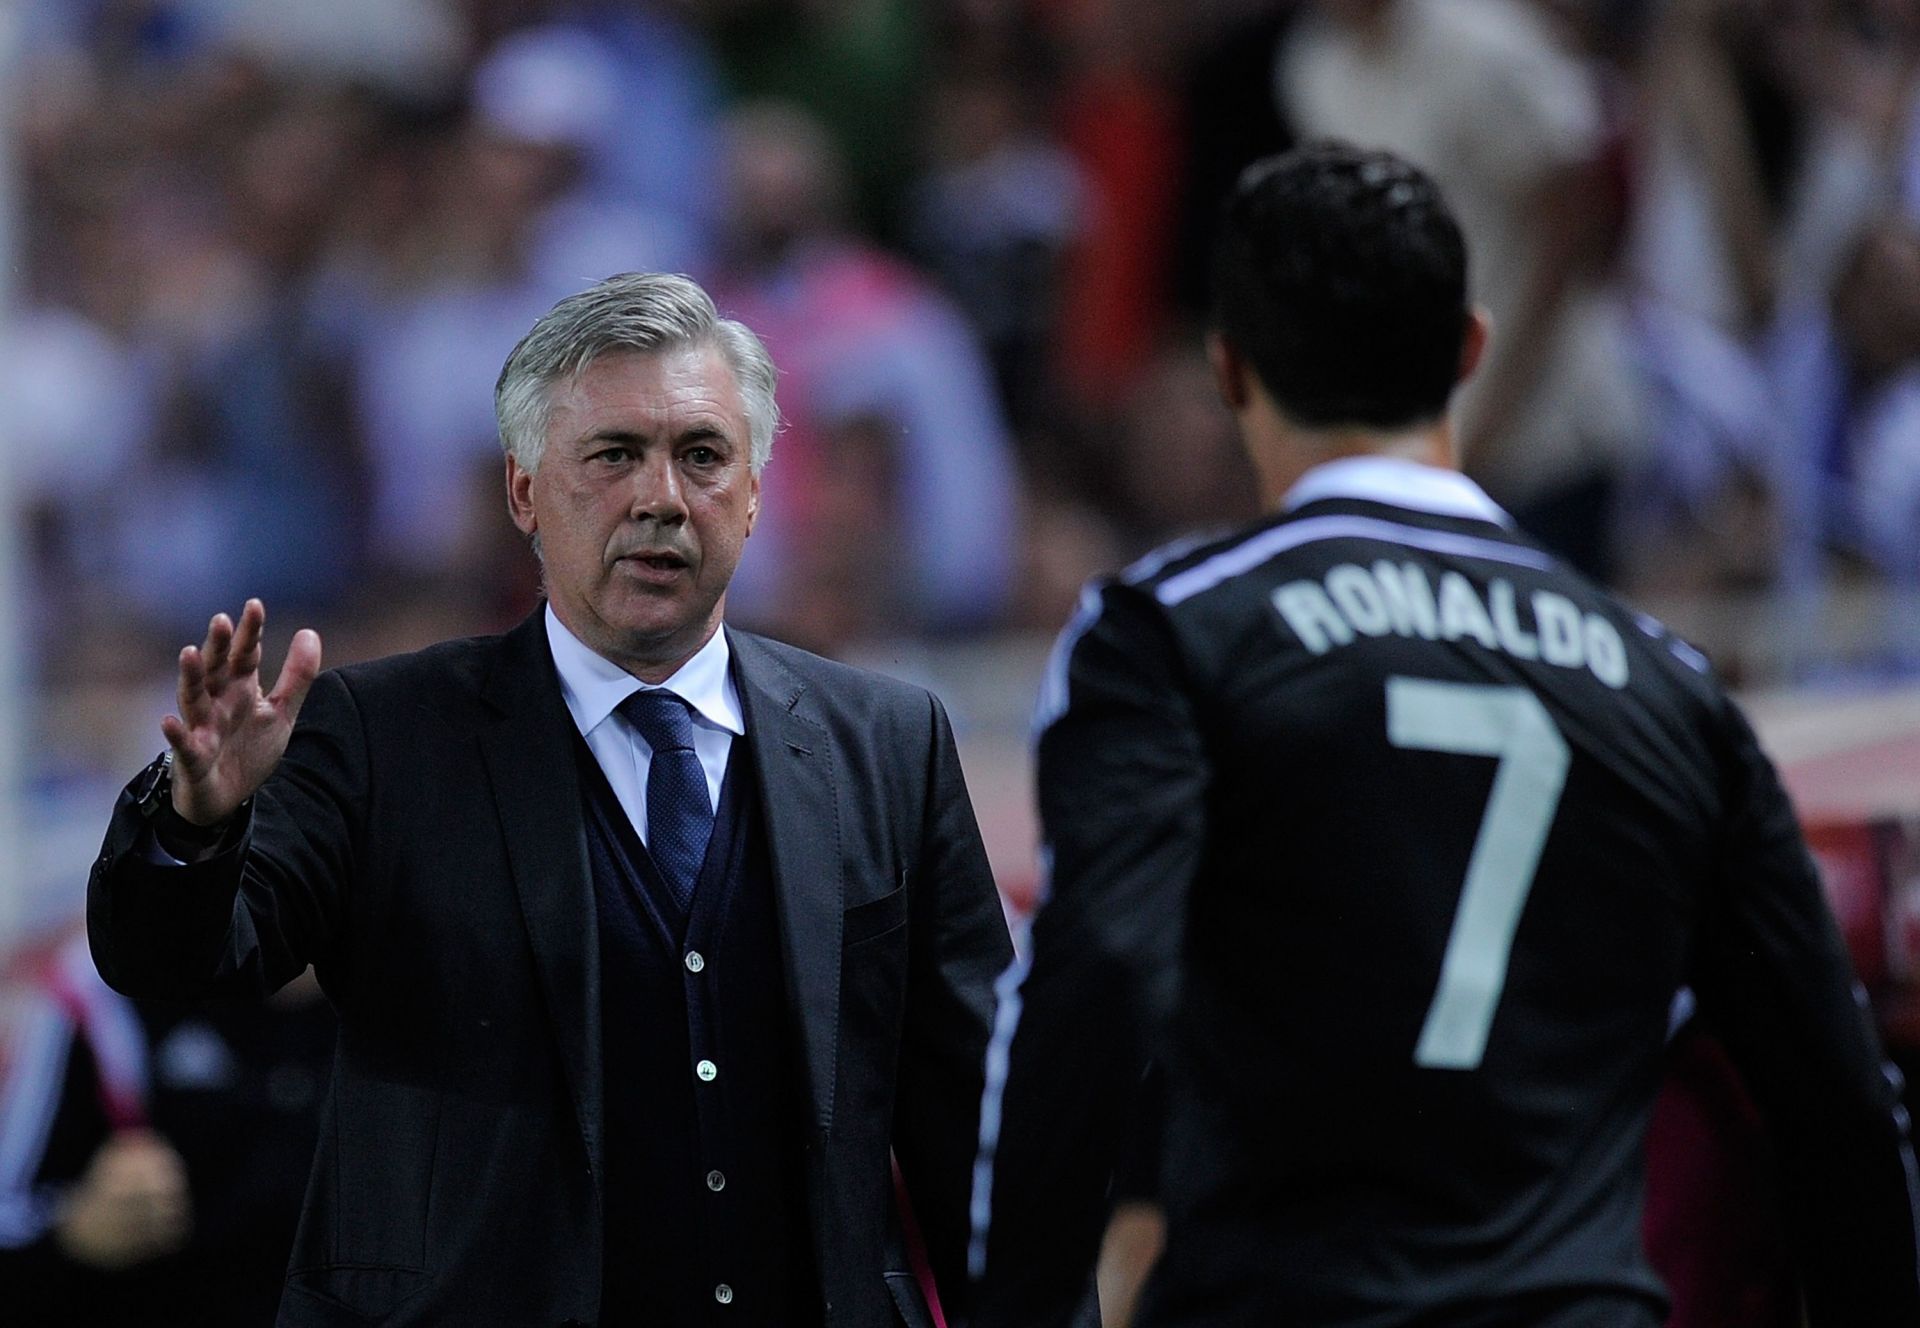 Carlo Ancelotti (left) managed Ronaldo at Real Madrid.